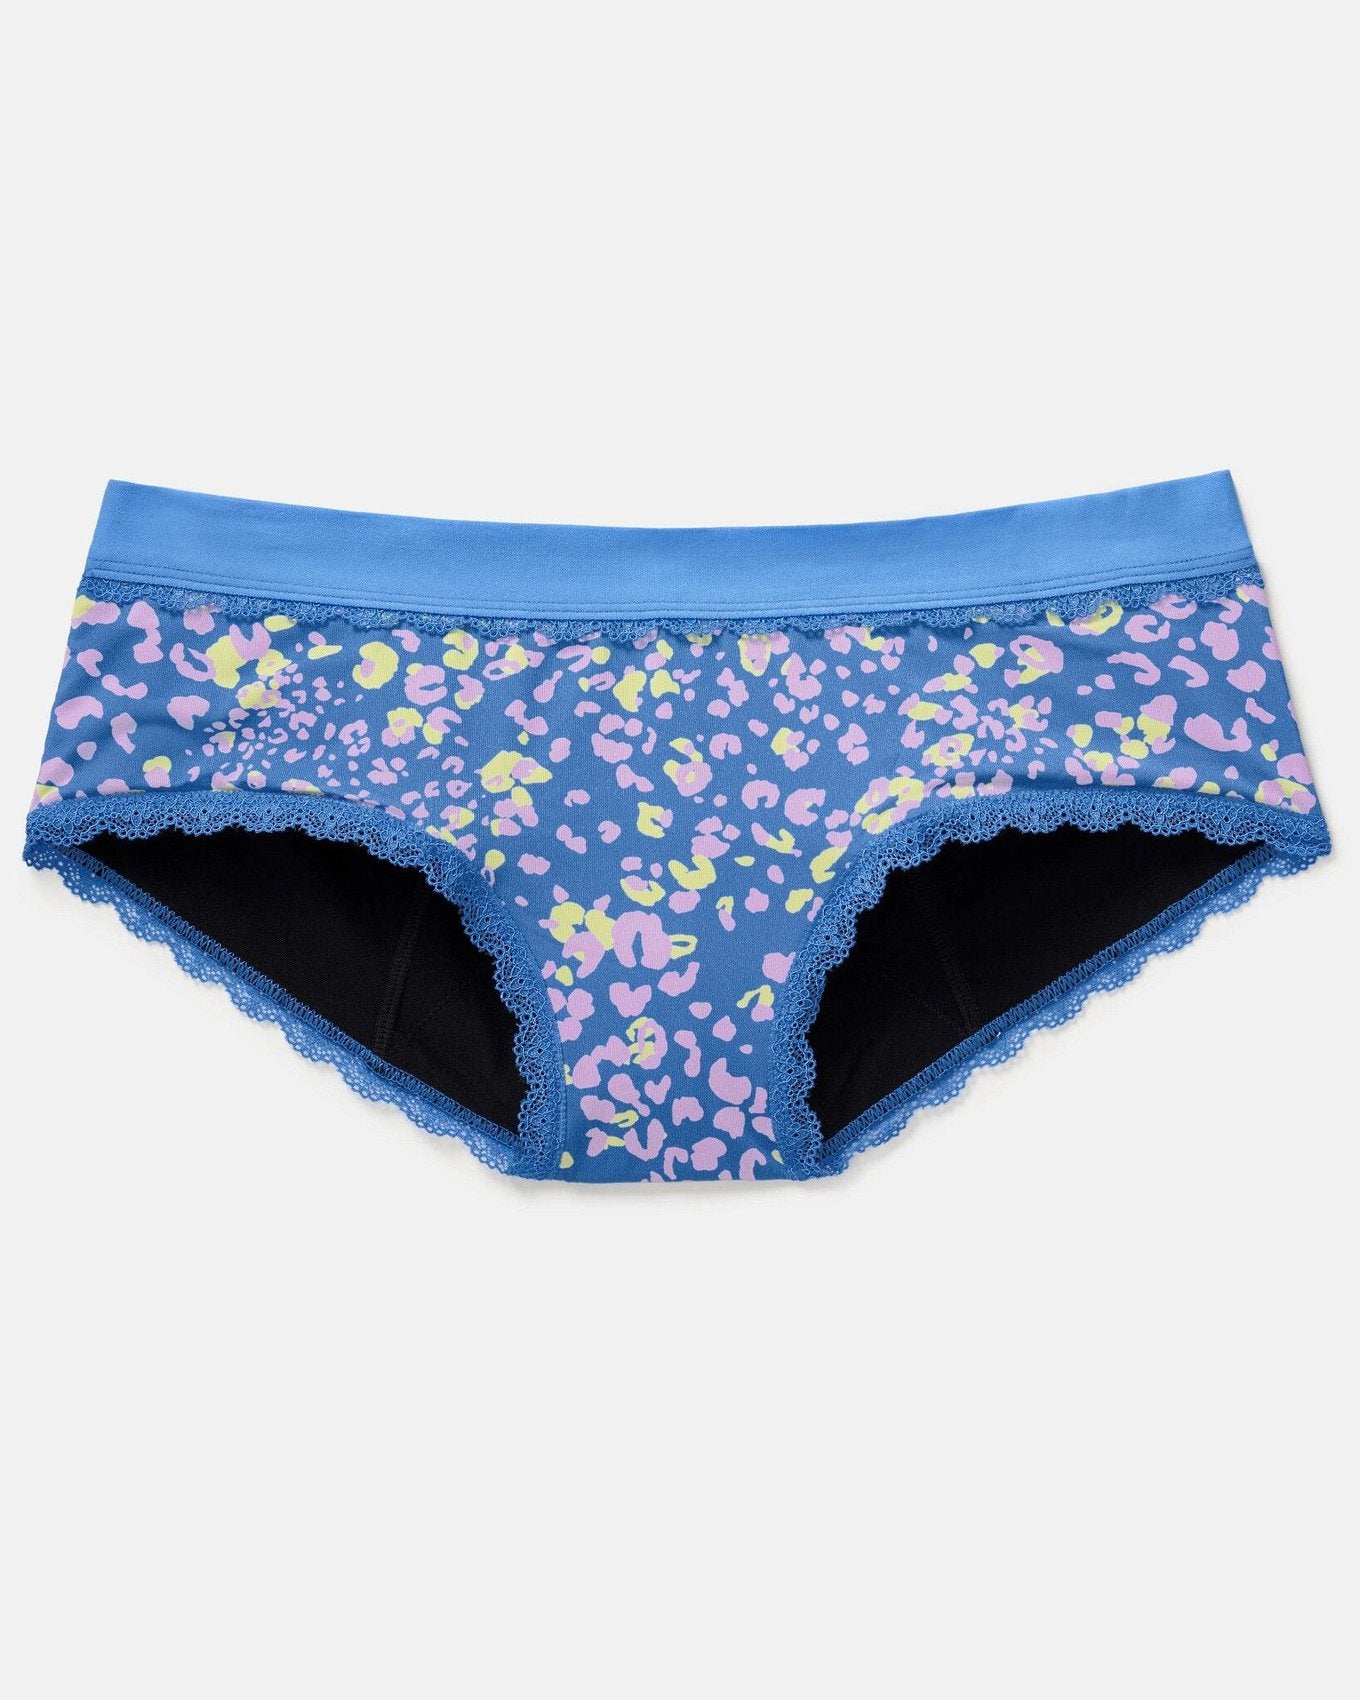 Joyja Olivia period-proof panty in color Jungle Confetti C01 and shape hipster